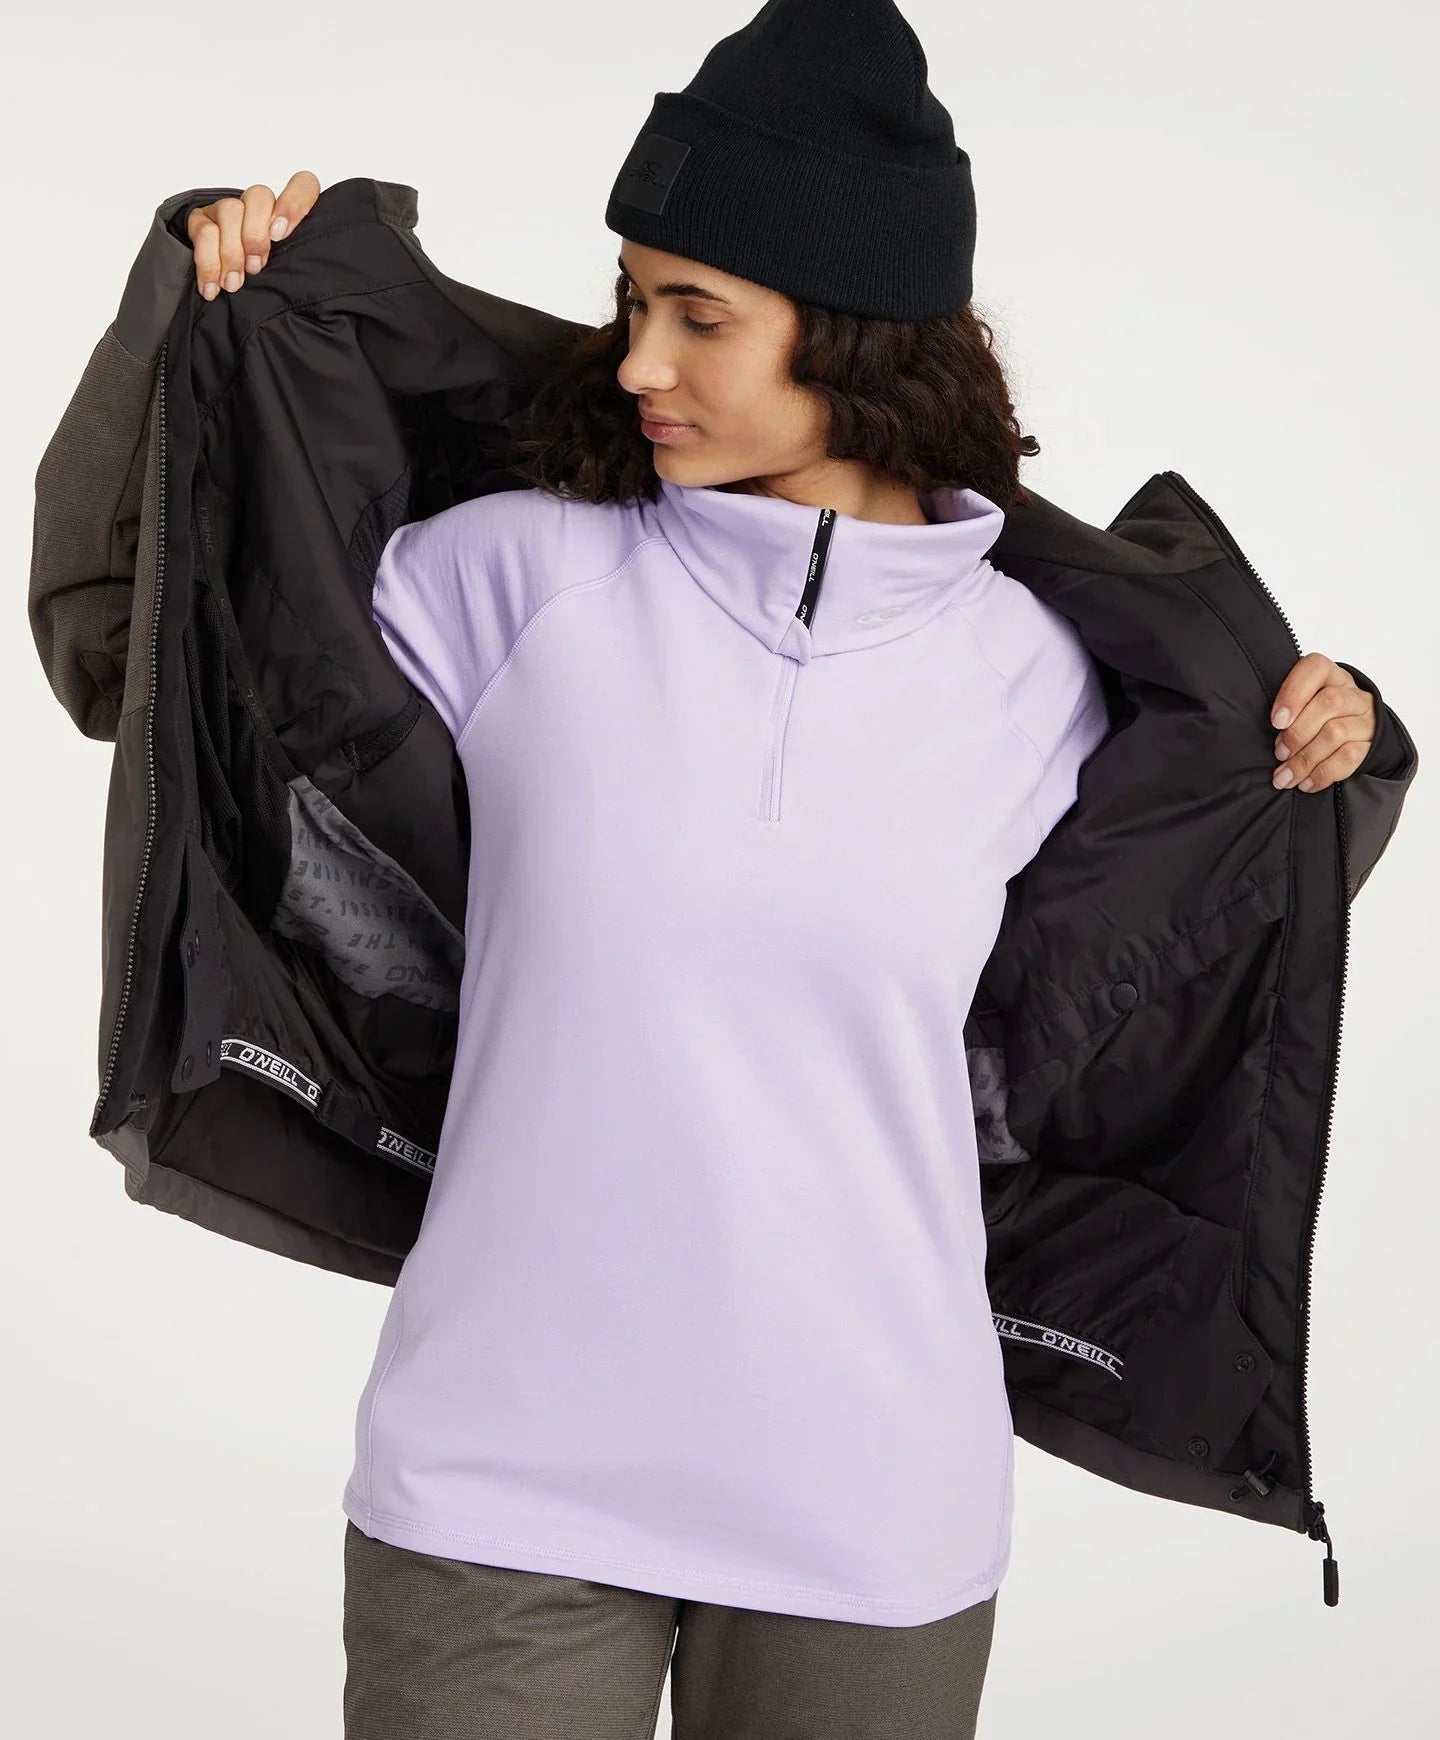 O'Neill Women's Carbonite Jacket - Black Out Women's Snow Jackets - SnowSkiersWarehouse